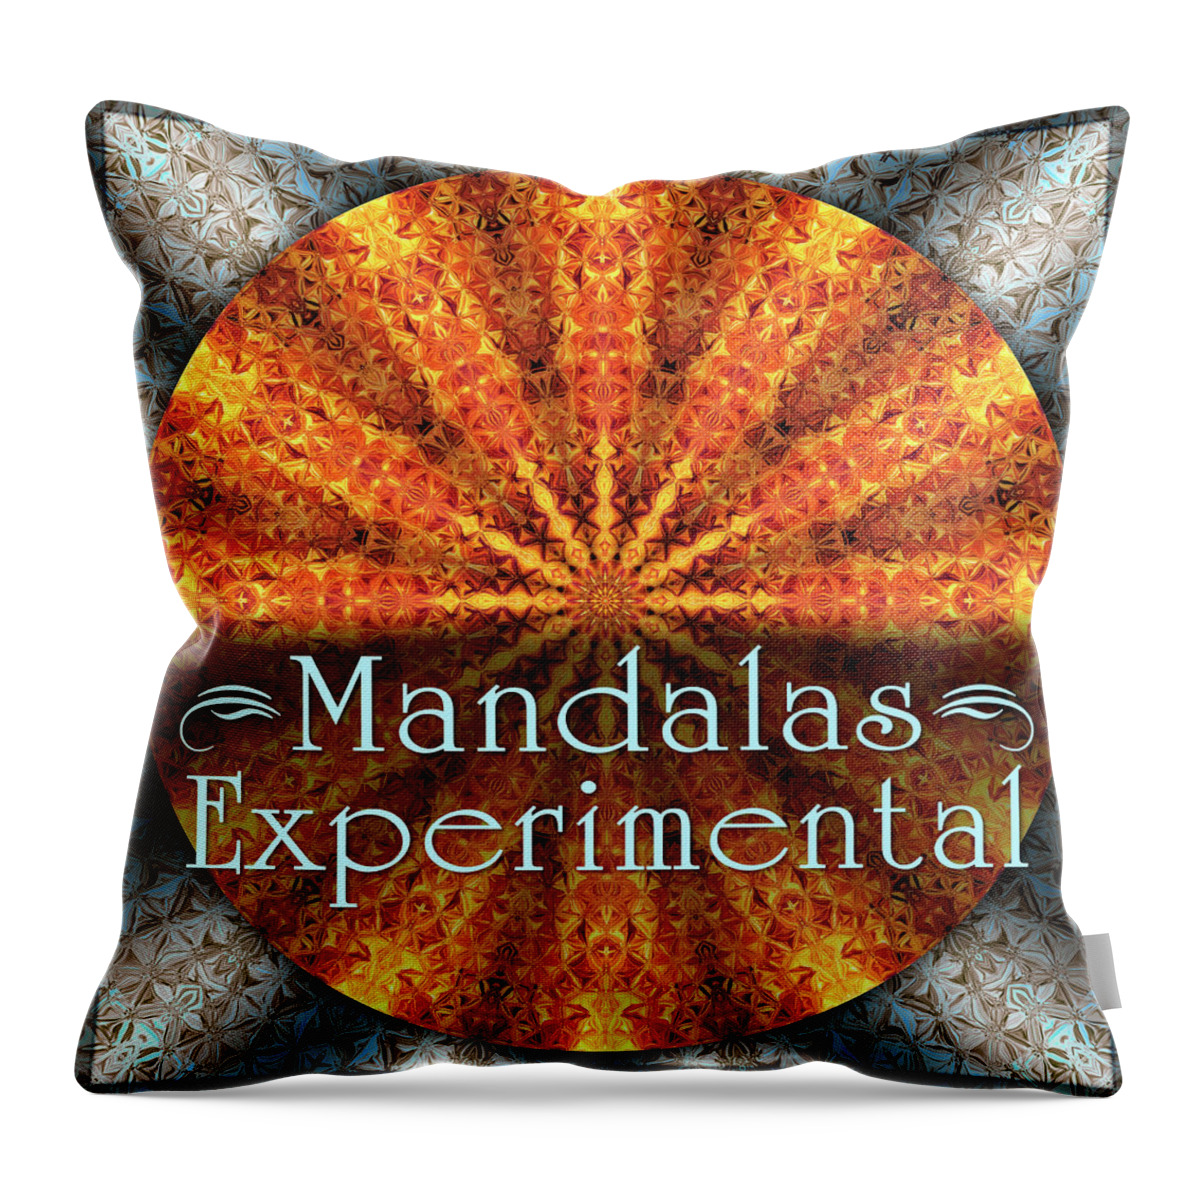 Sign Throw Pillow featuring the digital art Experimental Mandalas by Becky Titus